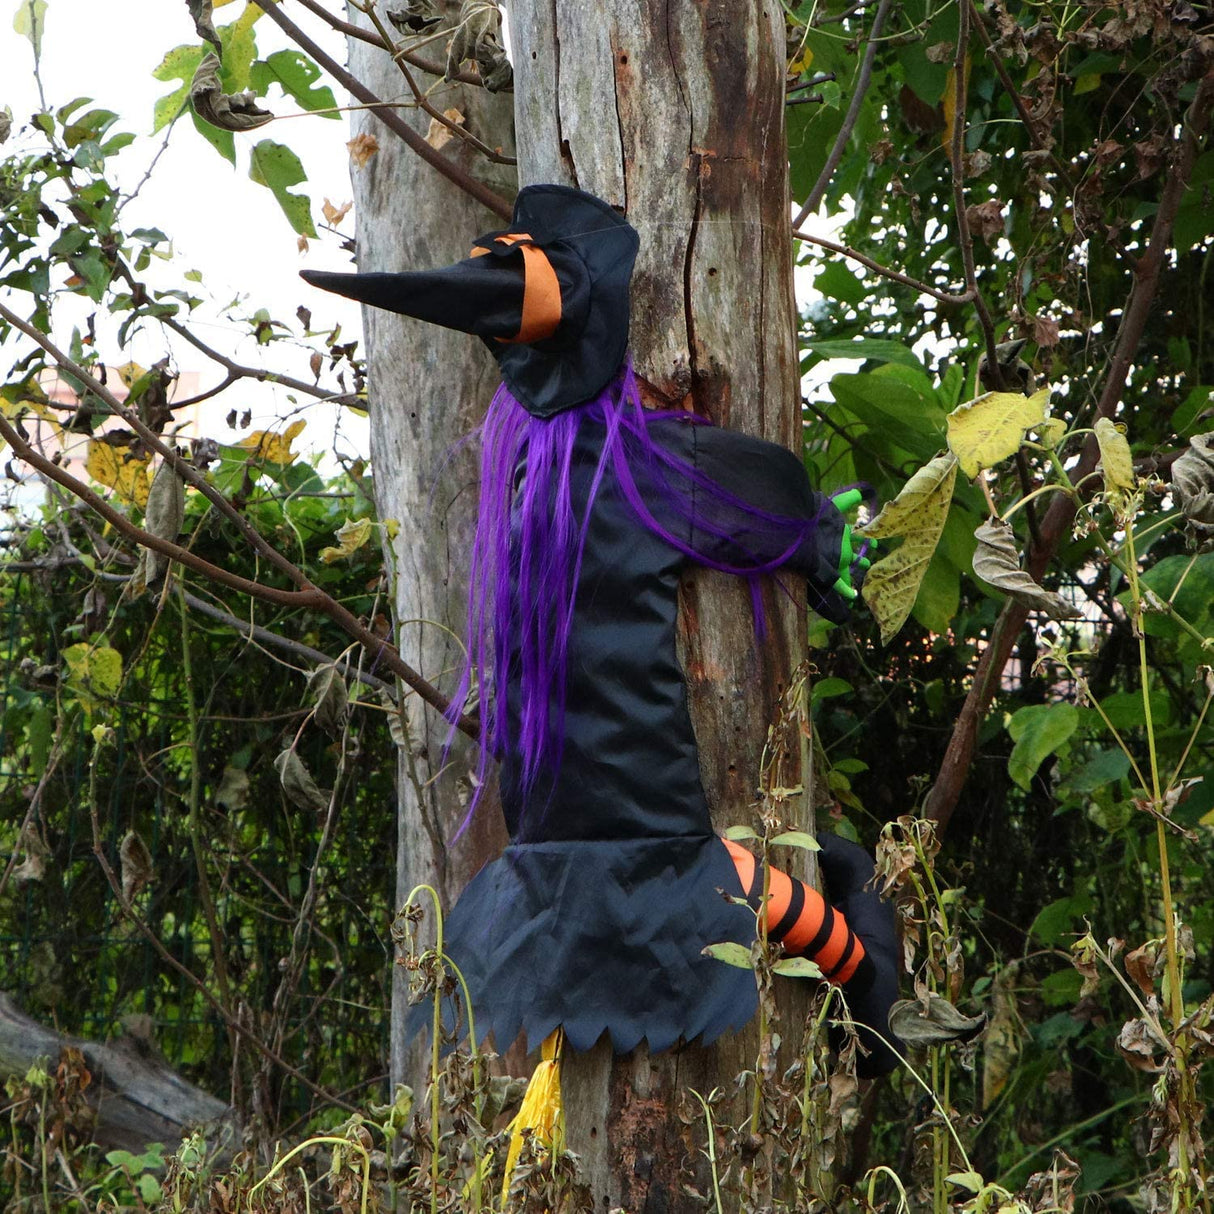 AYOGU Classic Crashing Witch, Hanging Halloween Decor Crashed Witch Outdoor Halloween Decorations (Witch)